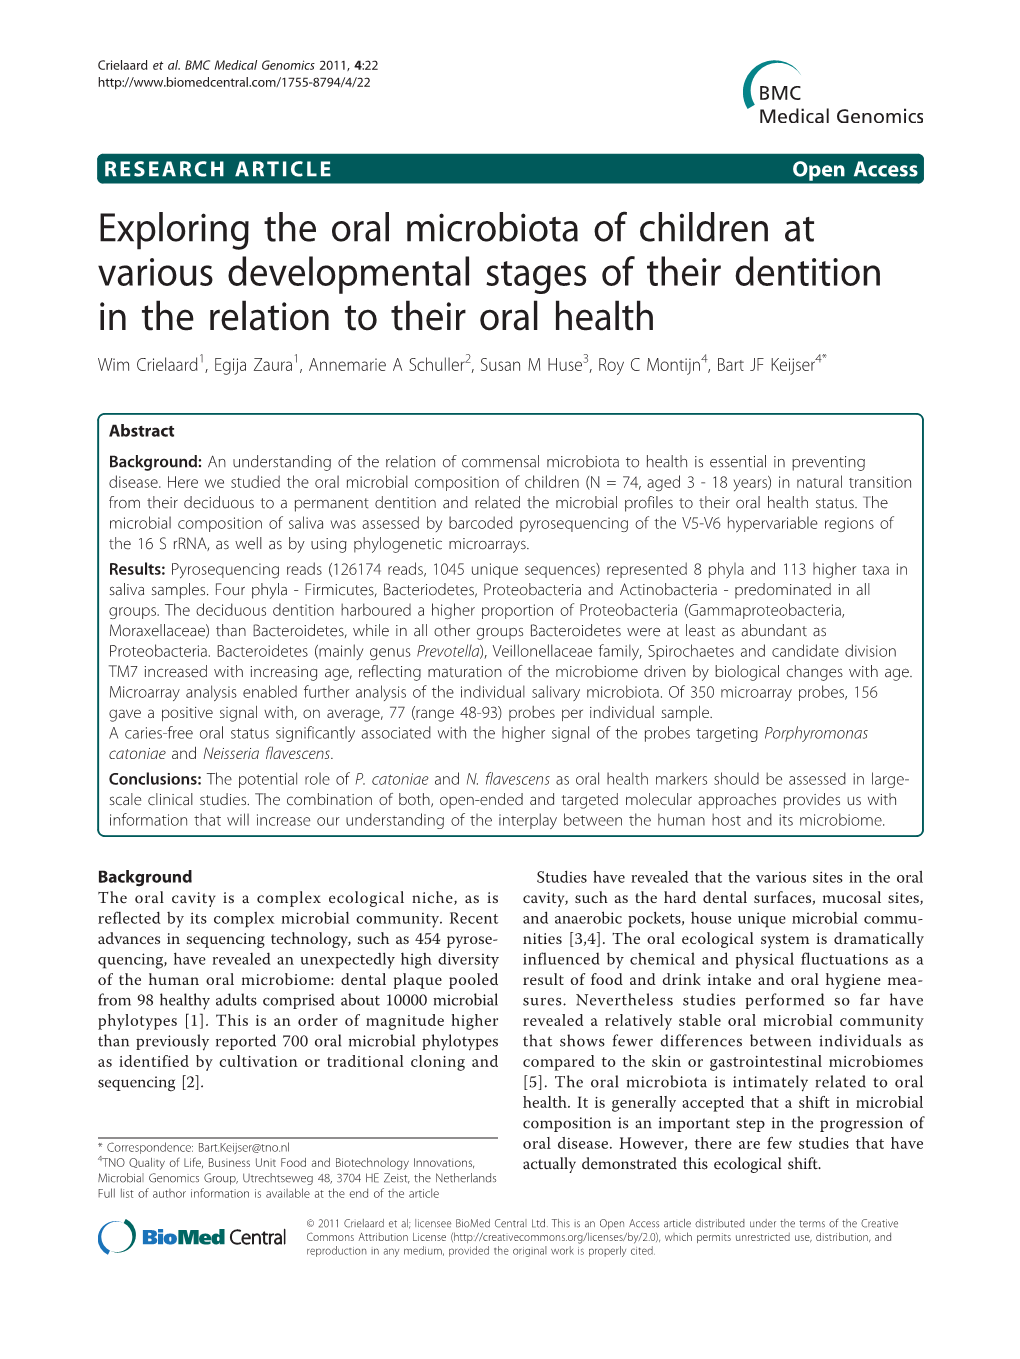 Exploring the Oral Microbiota of Children at Various Developmental